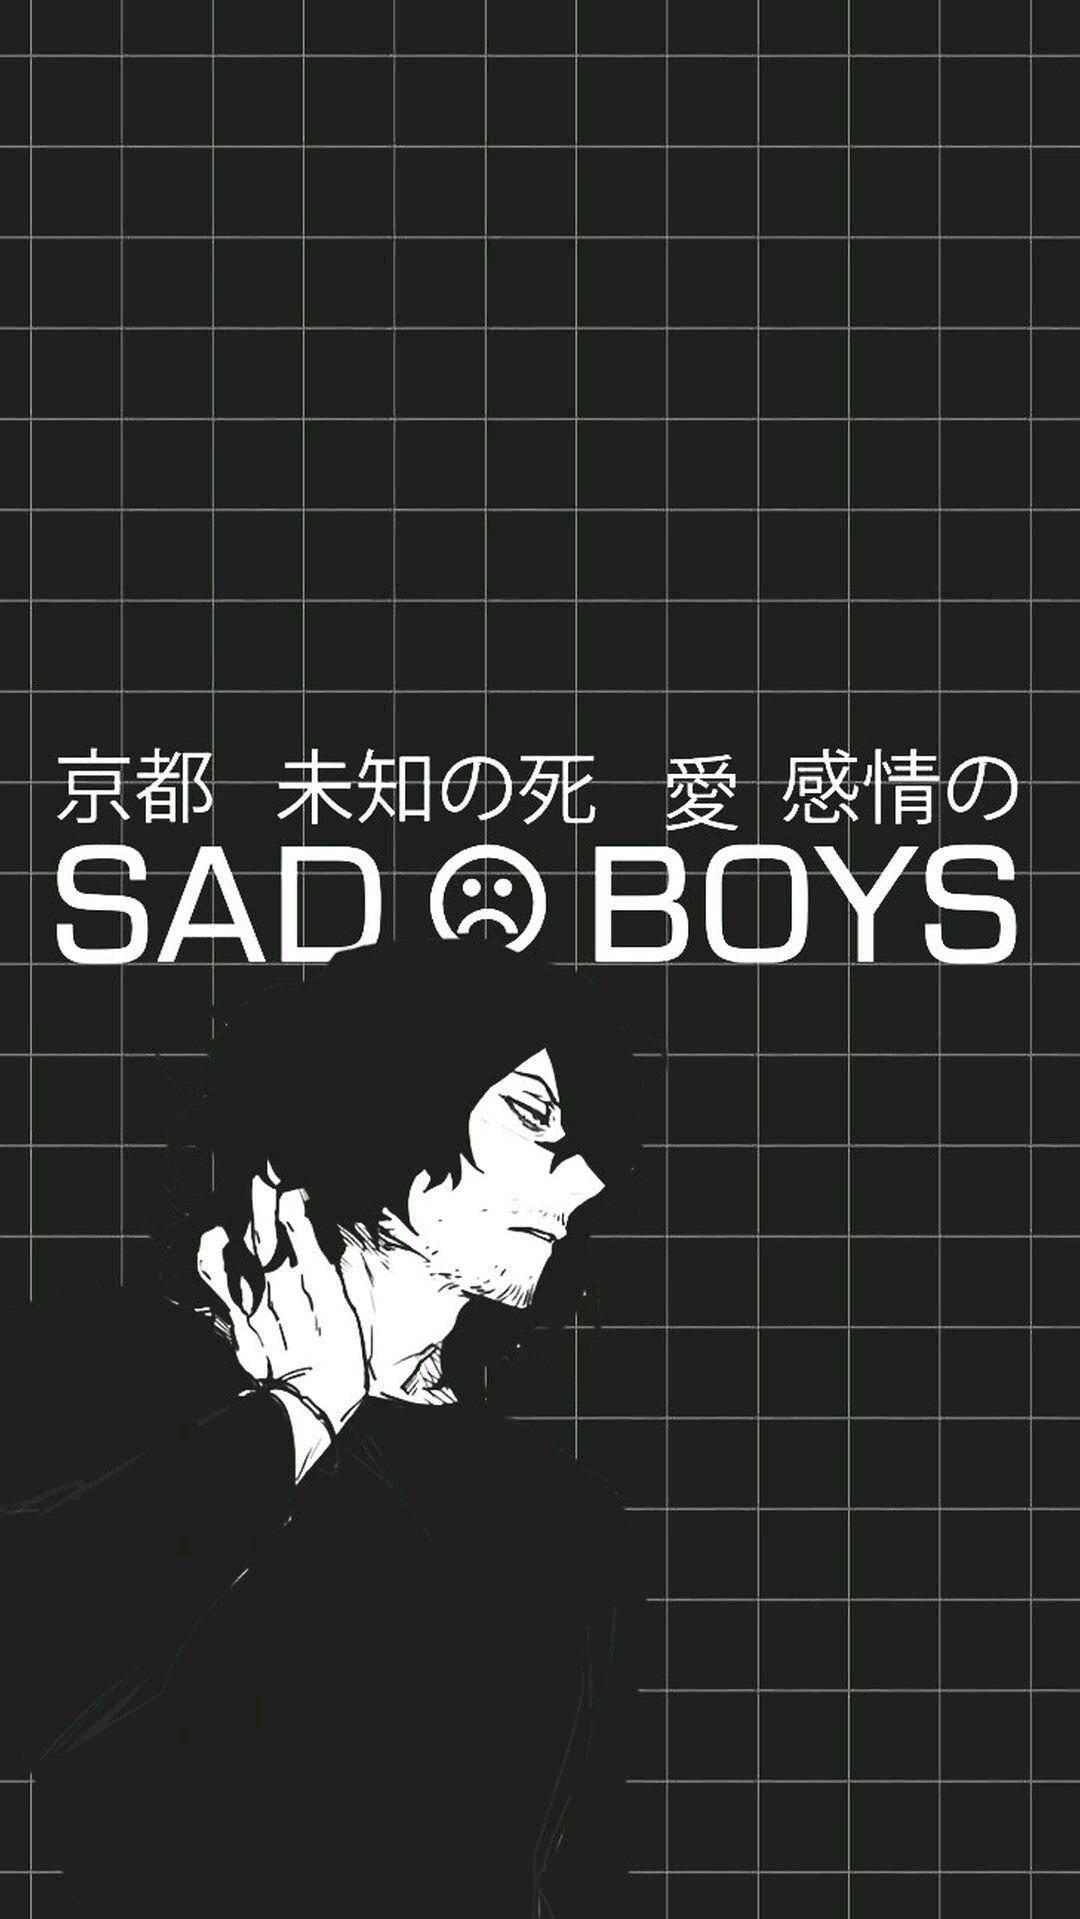 Download Dark Anime Aesthetic Sad Boys Wallpaper